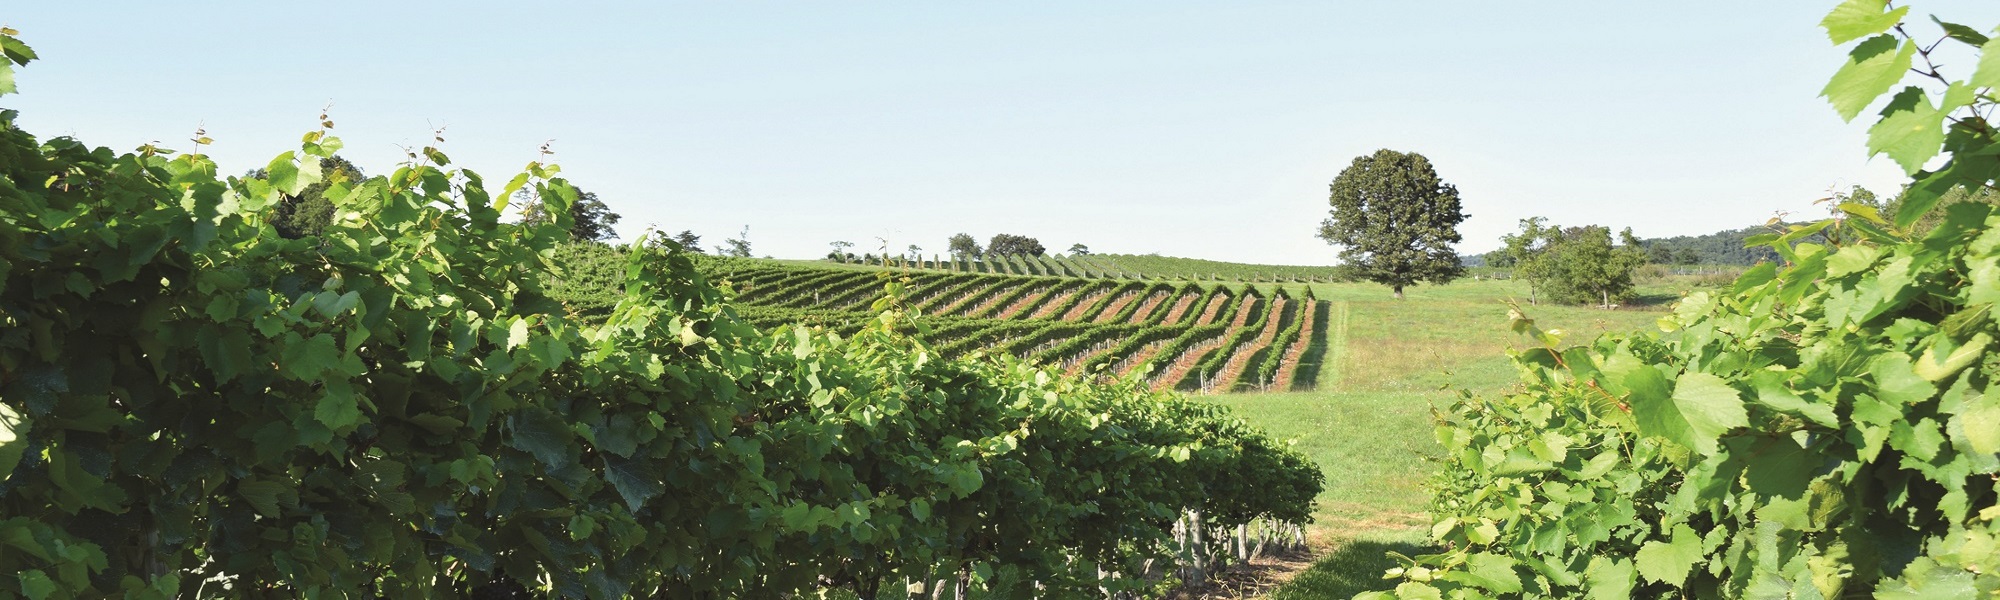 Shenendoah Valley Winery - Vineyard 2